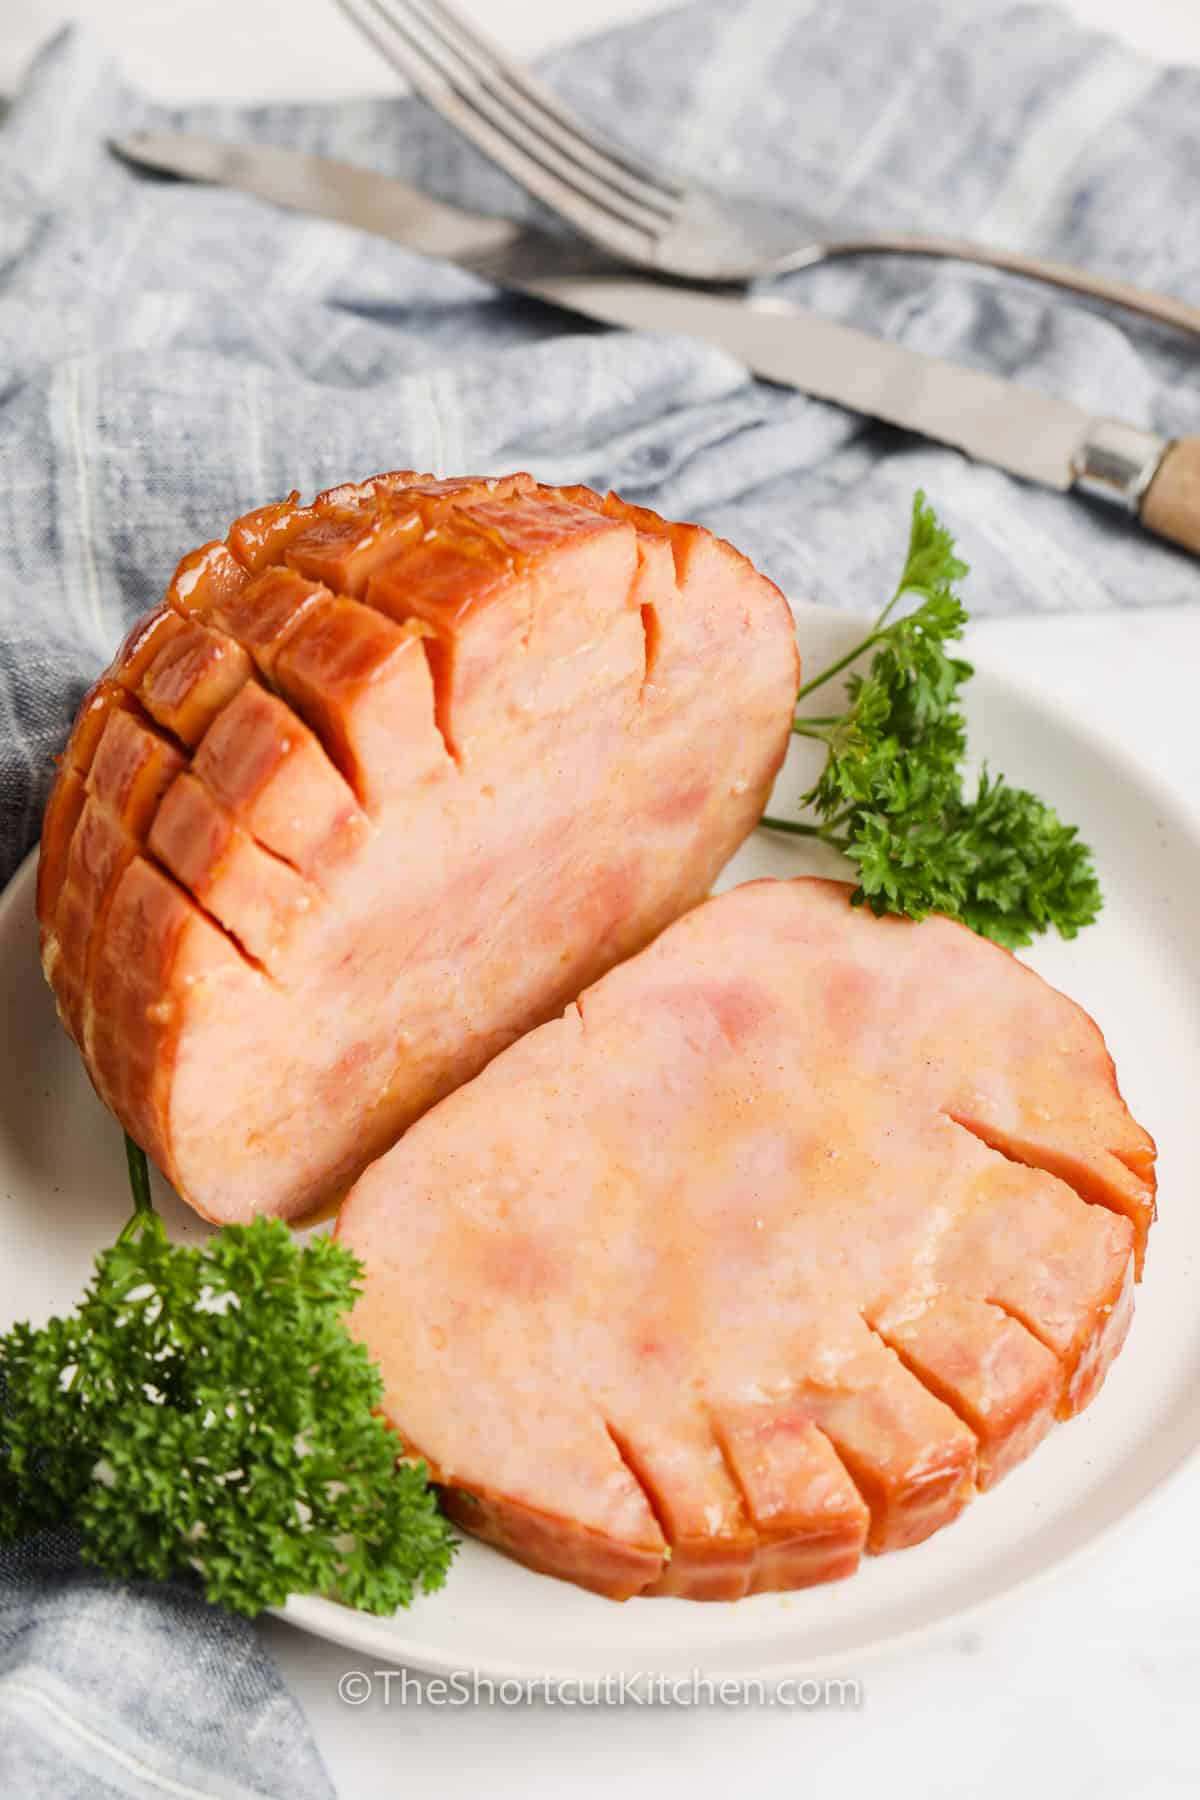 Crockpot Brown Sugar Ham on a plate garnished with parsley